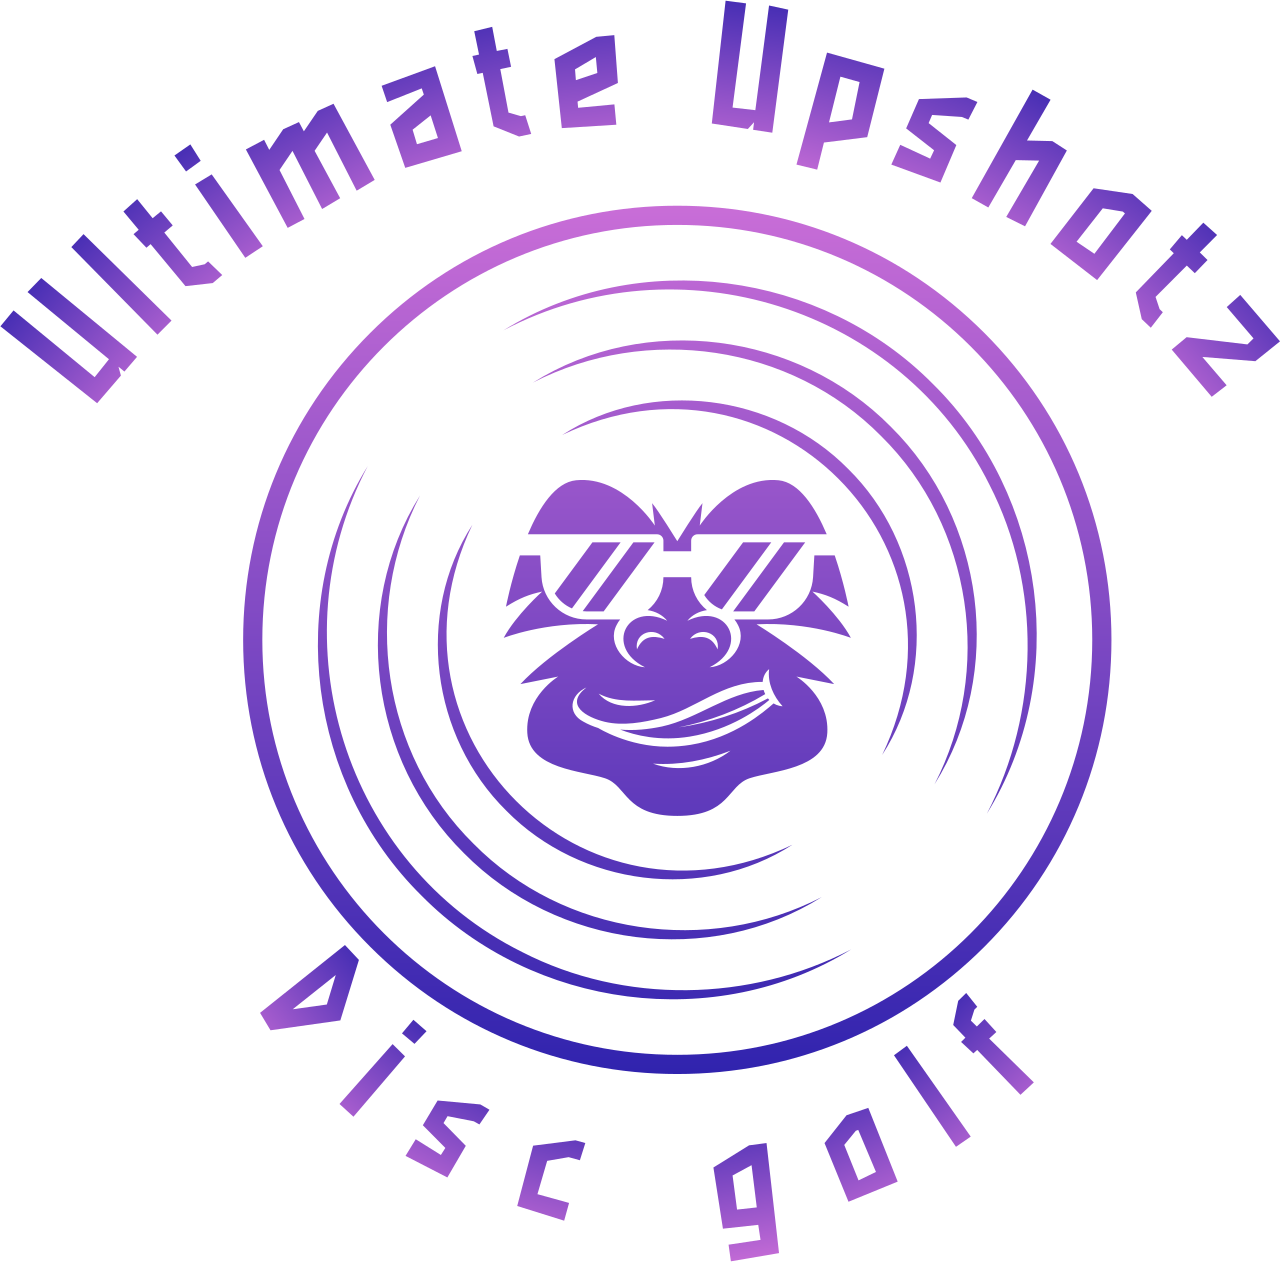 Ultimate Upshotz 's web page